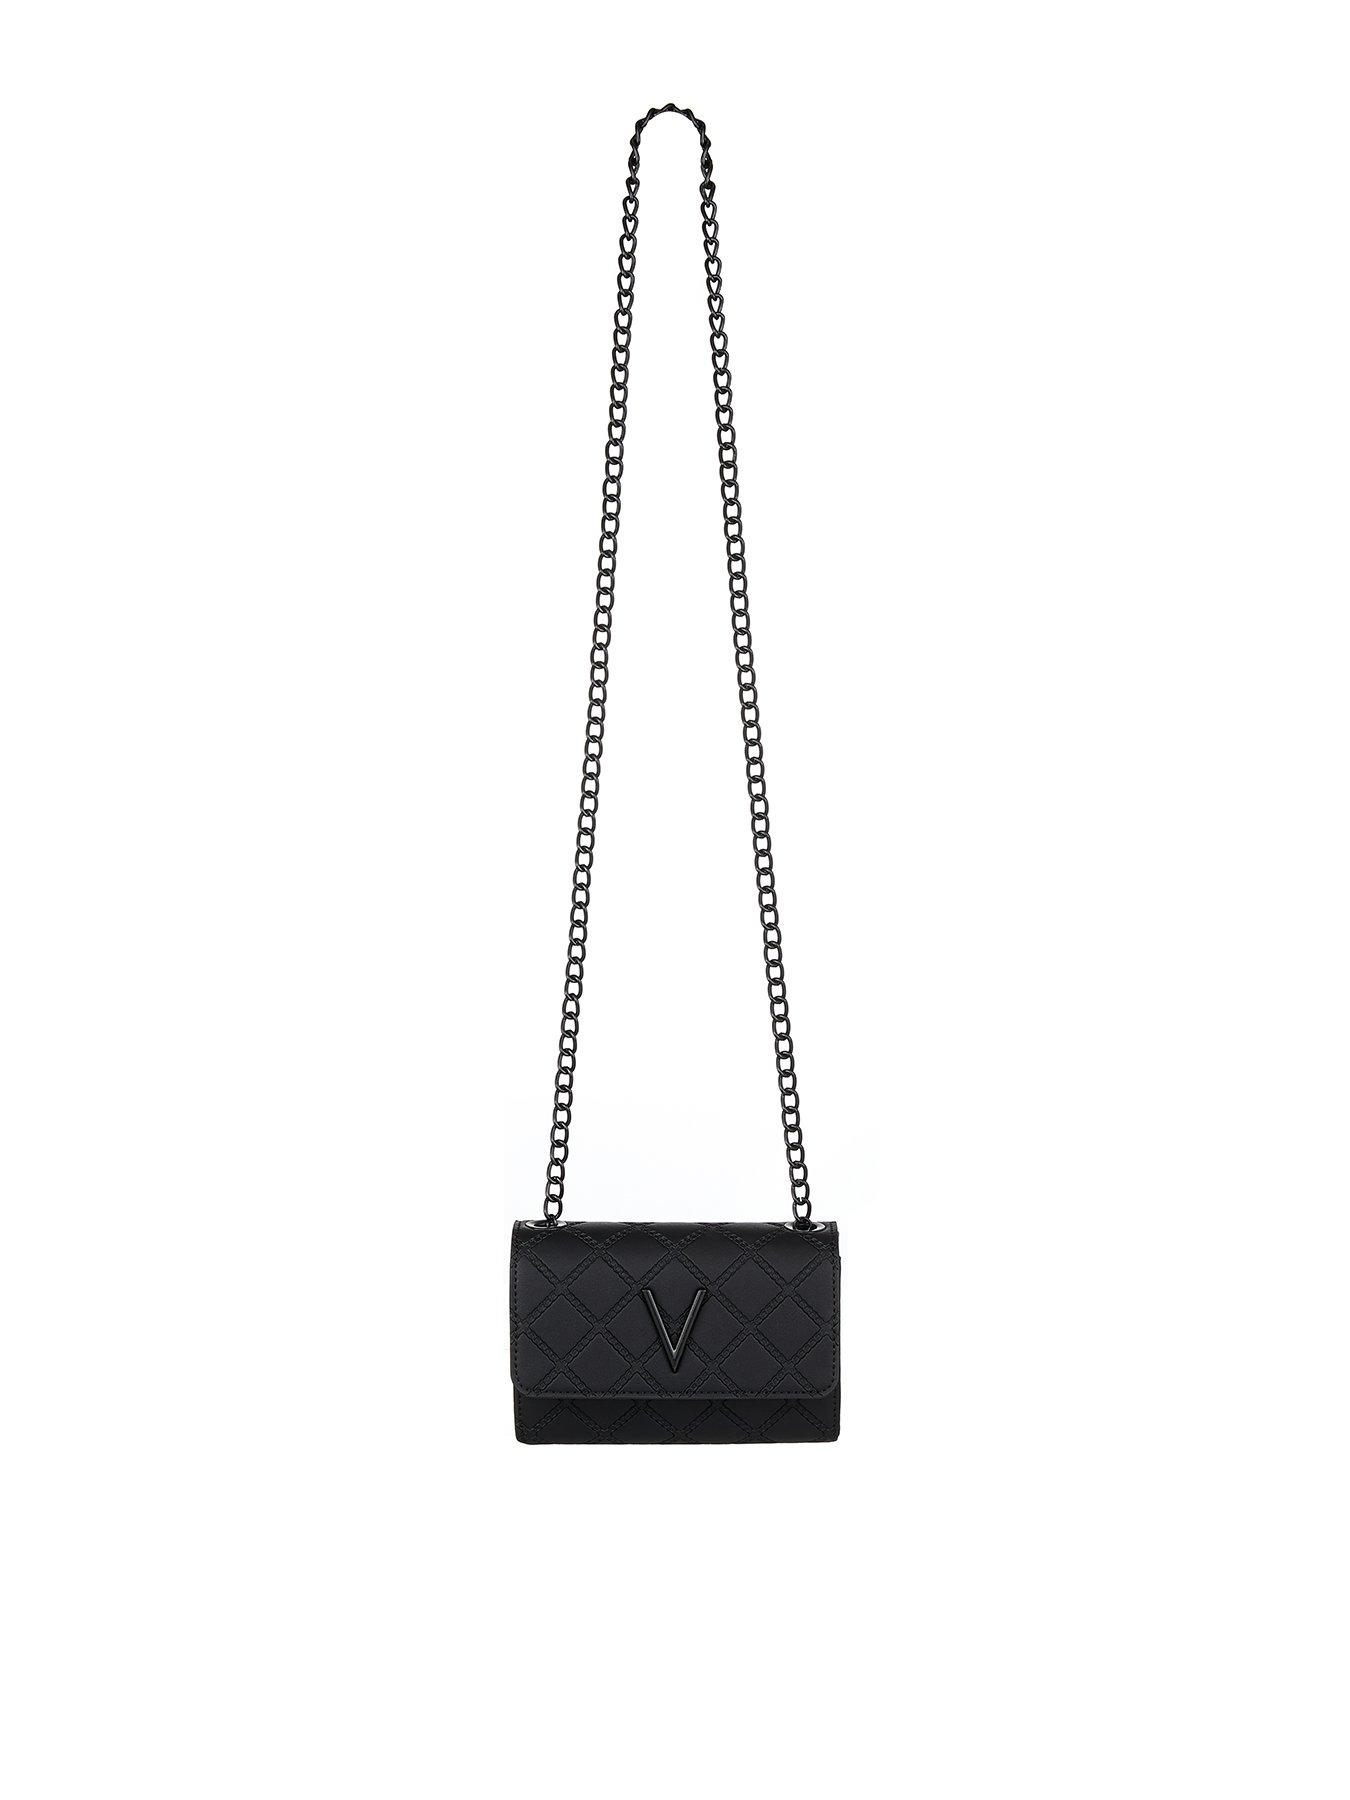 Valentino Bags Alexia metal logo strap cross body bag in black